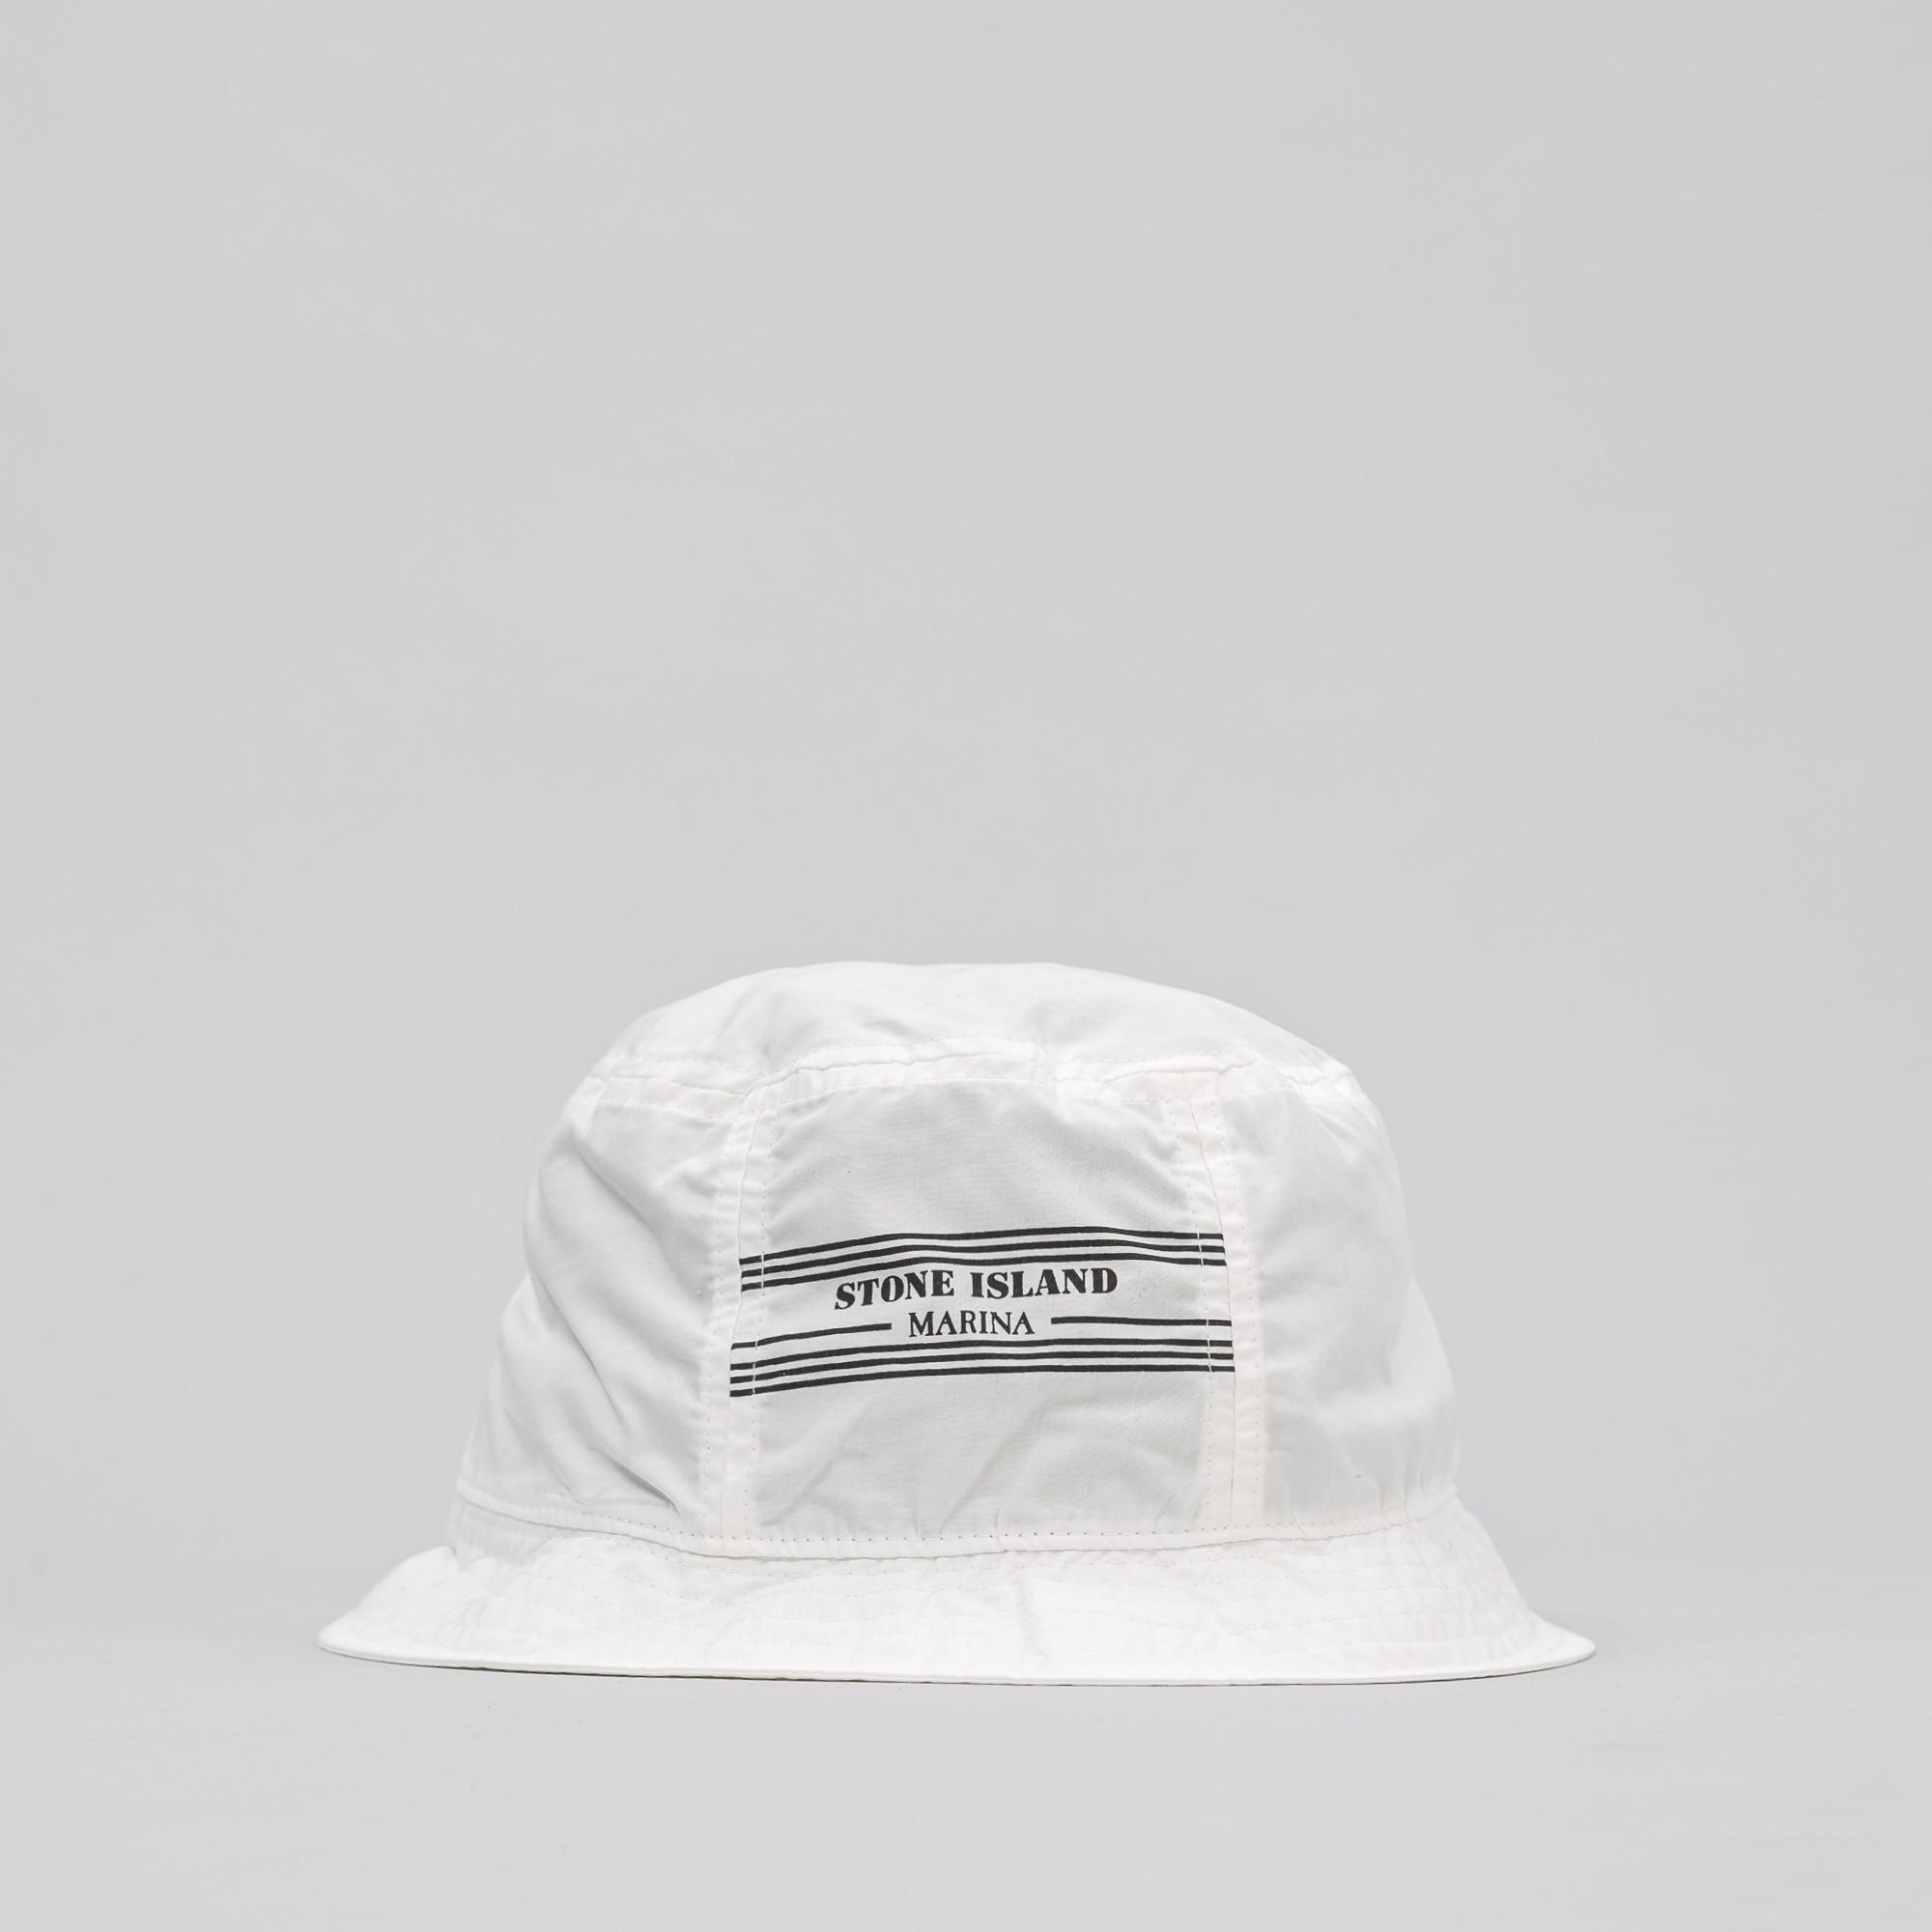 Stone Island Cotton 992xc Marina Bucket Hat In White for Men - Lyst